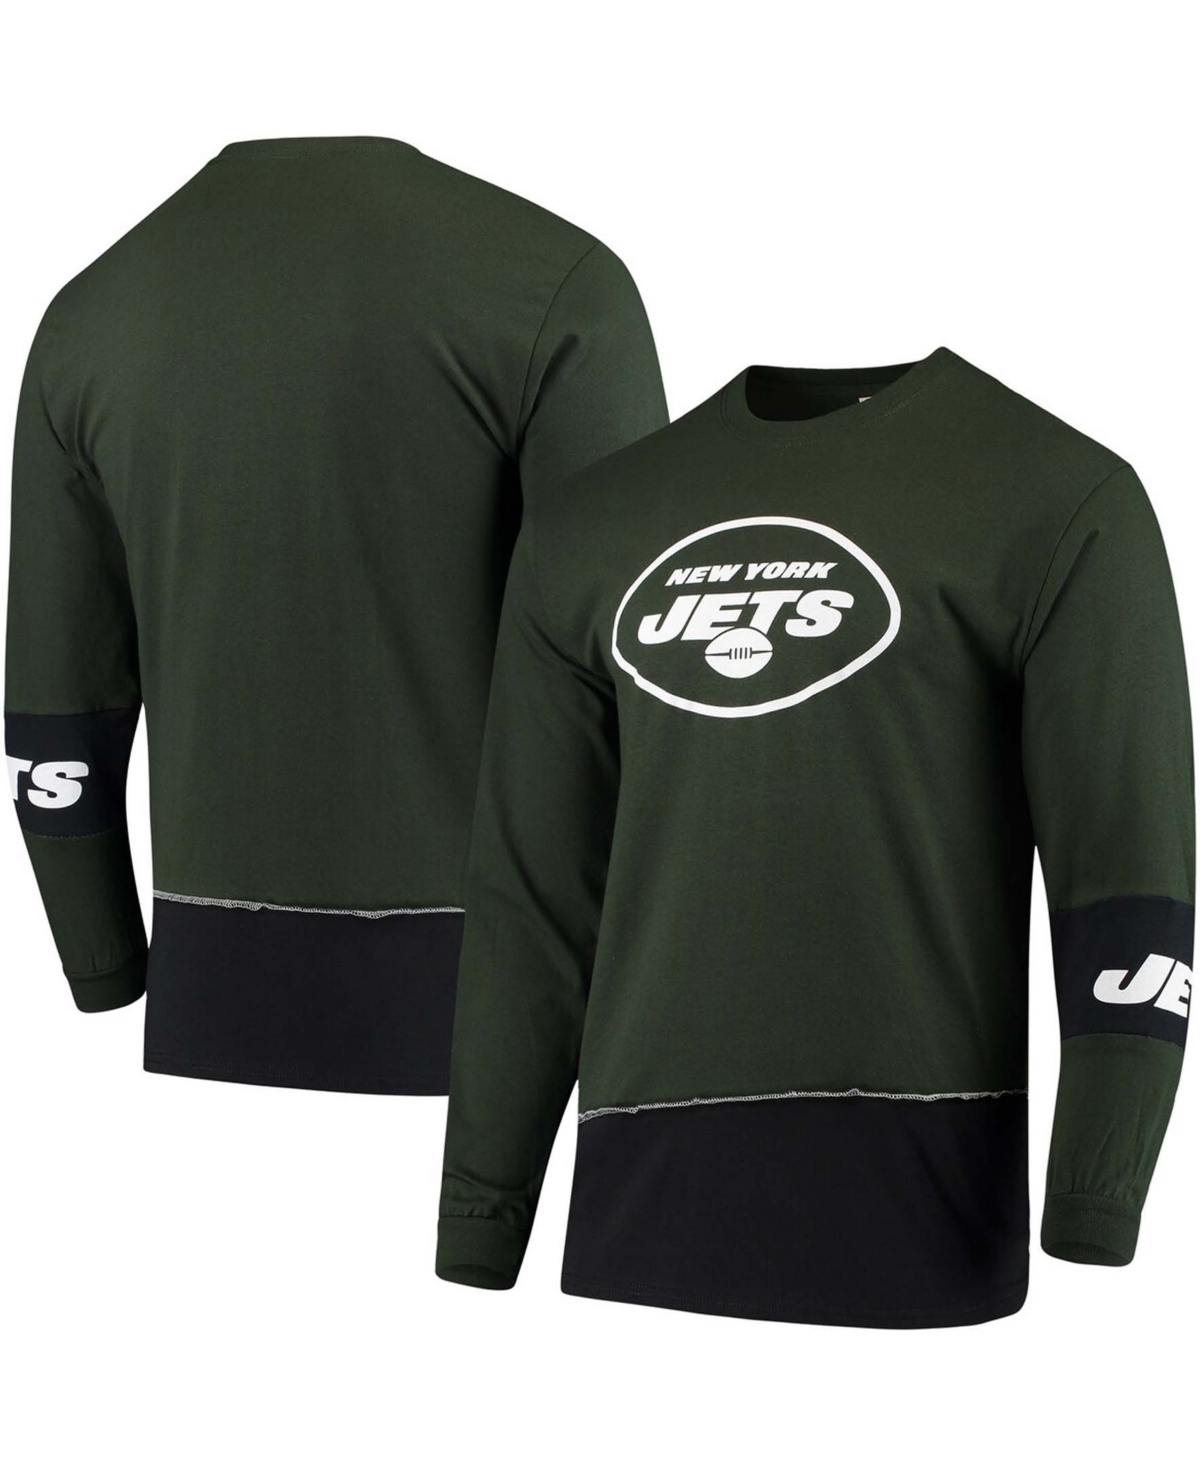 Men's Green, Black New York Jets Angle Long Sleeve T-shirt - Green, Black